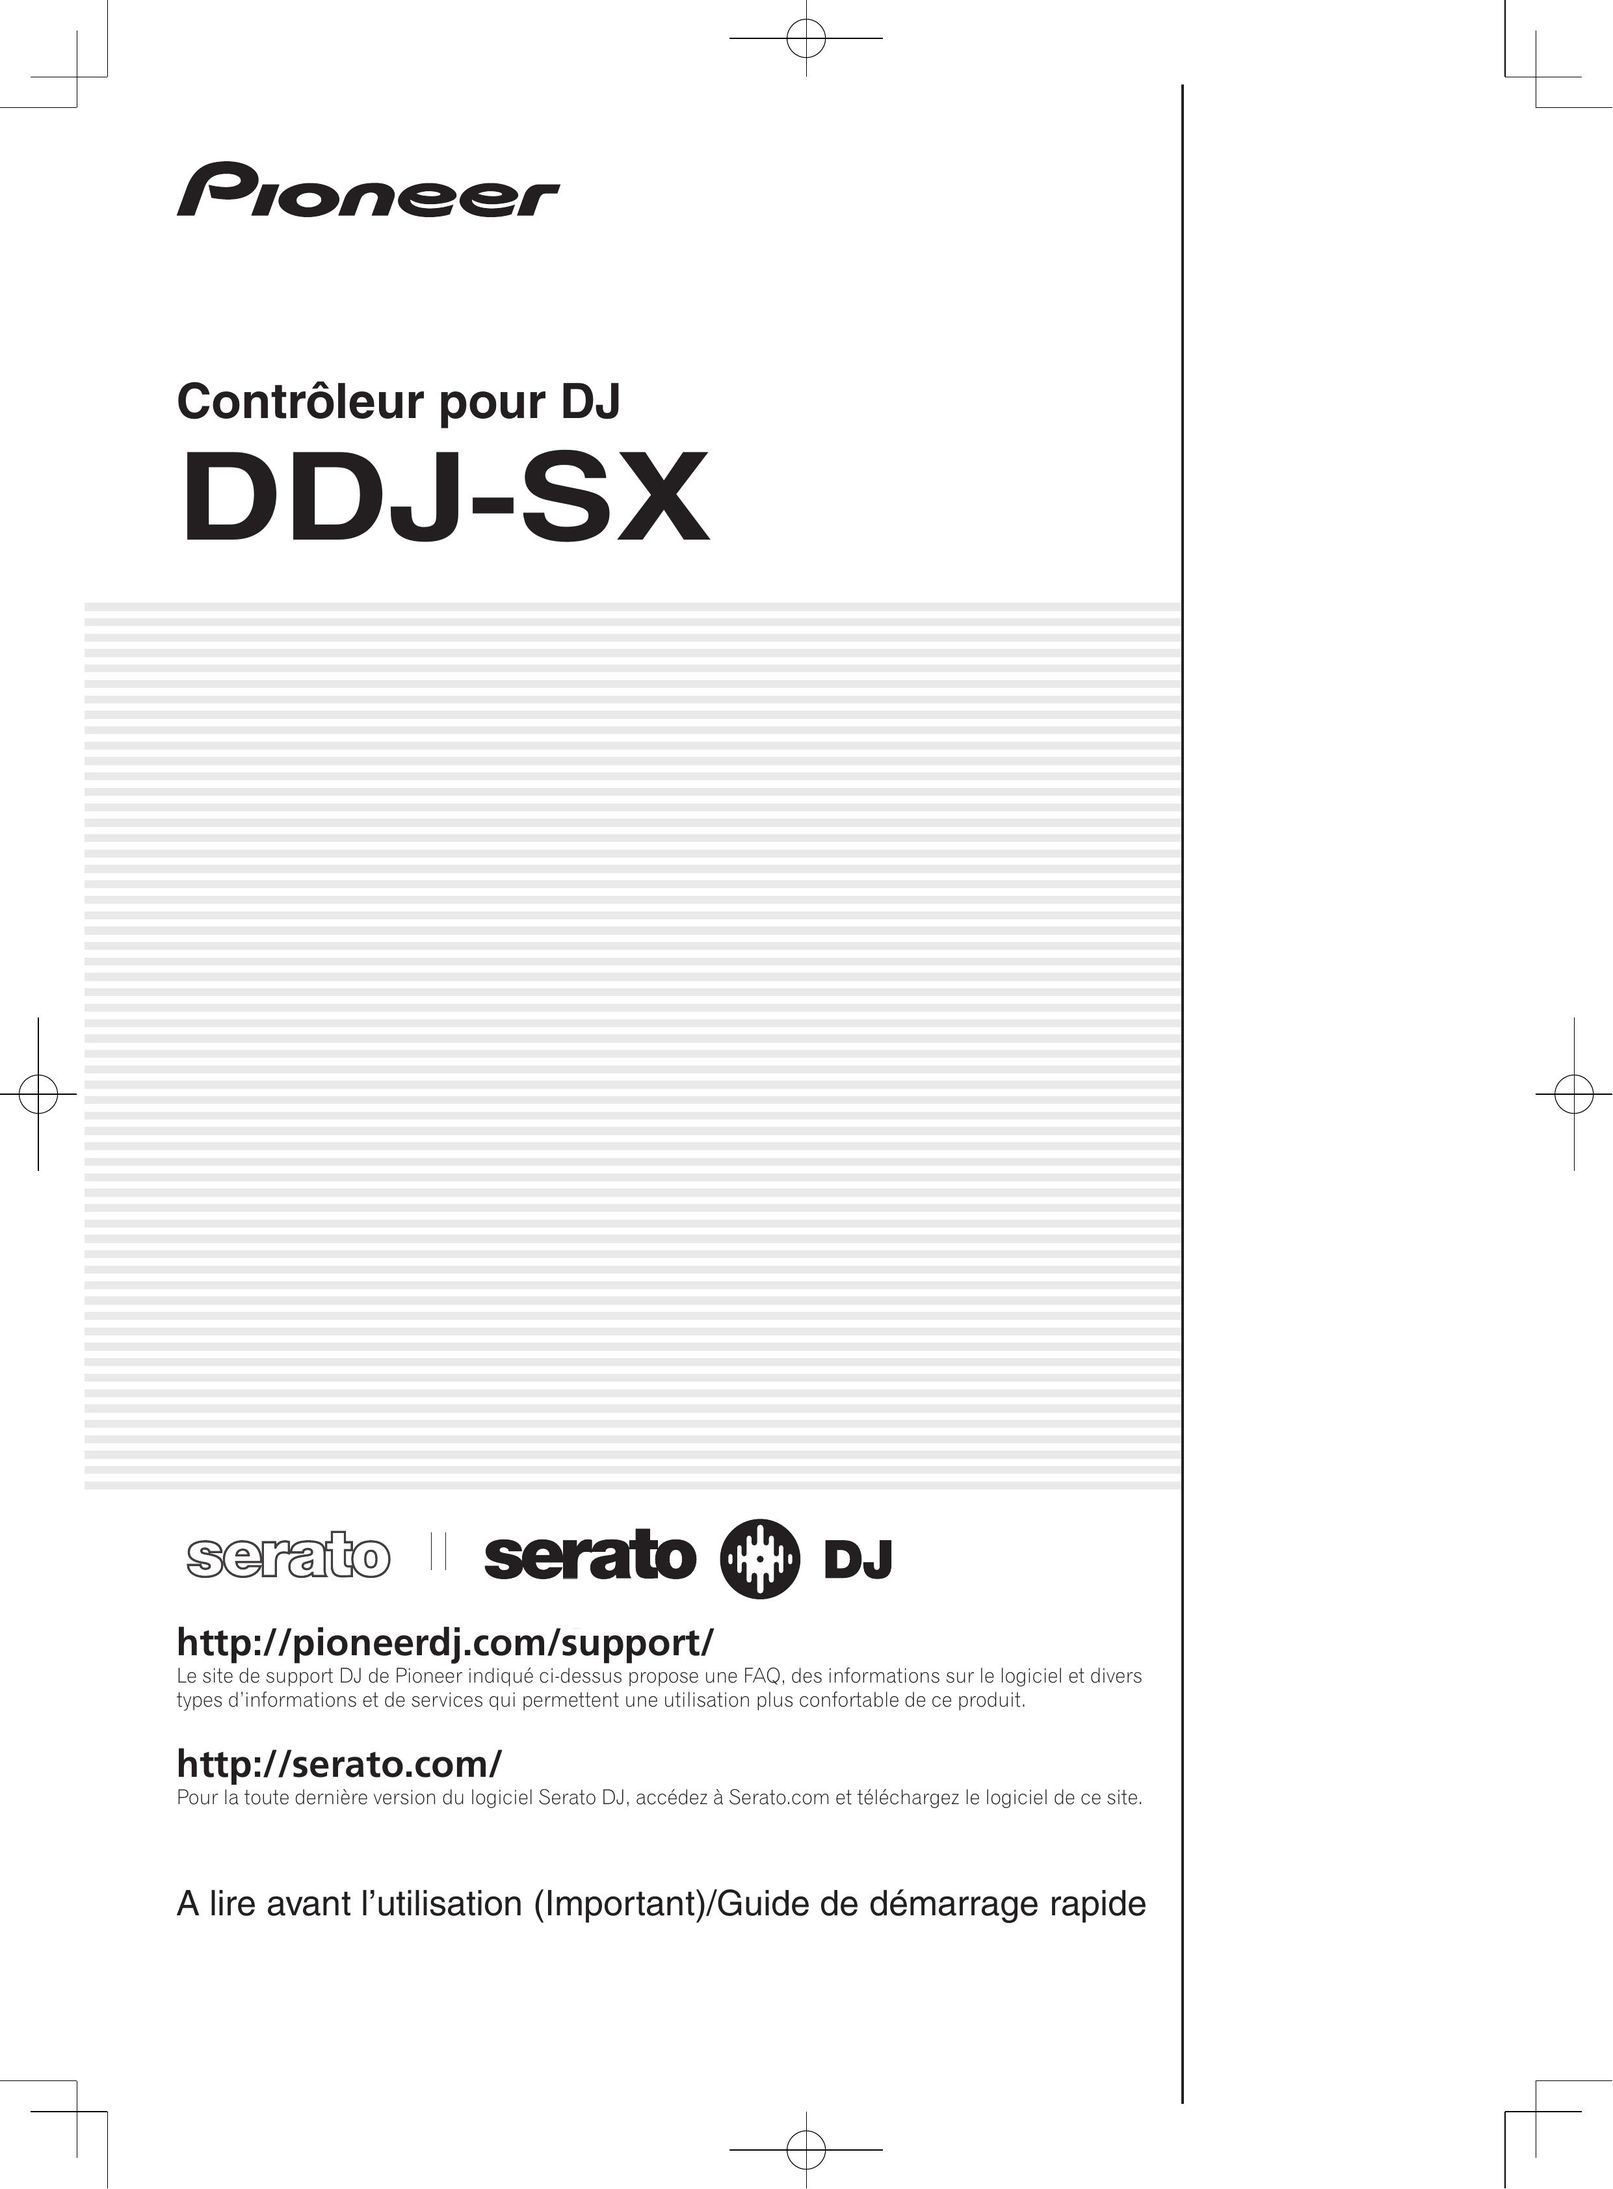 Pioneer DDJ-SX Car Stereo System User Manual